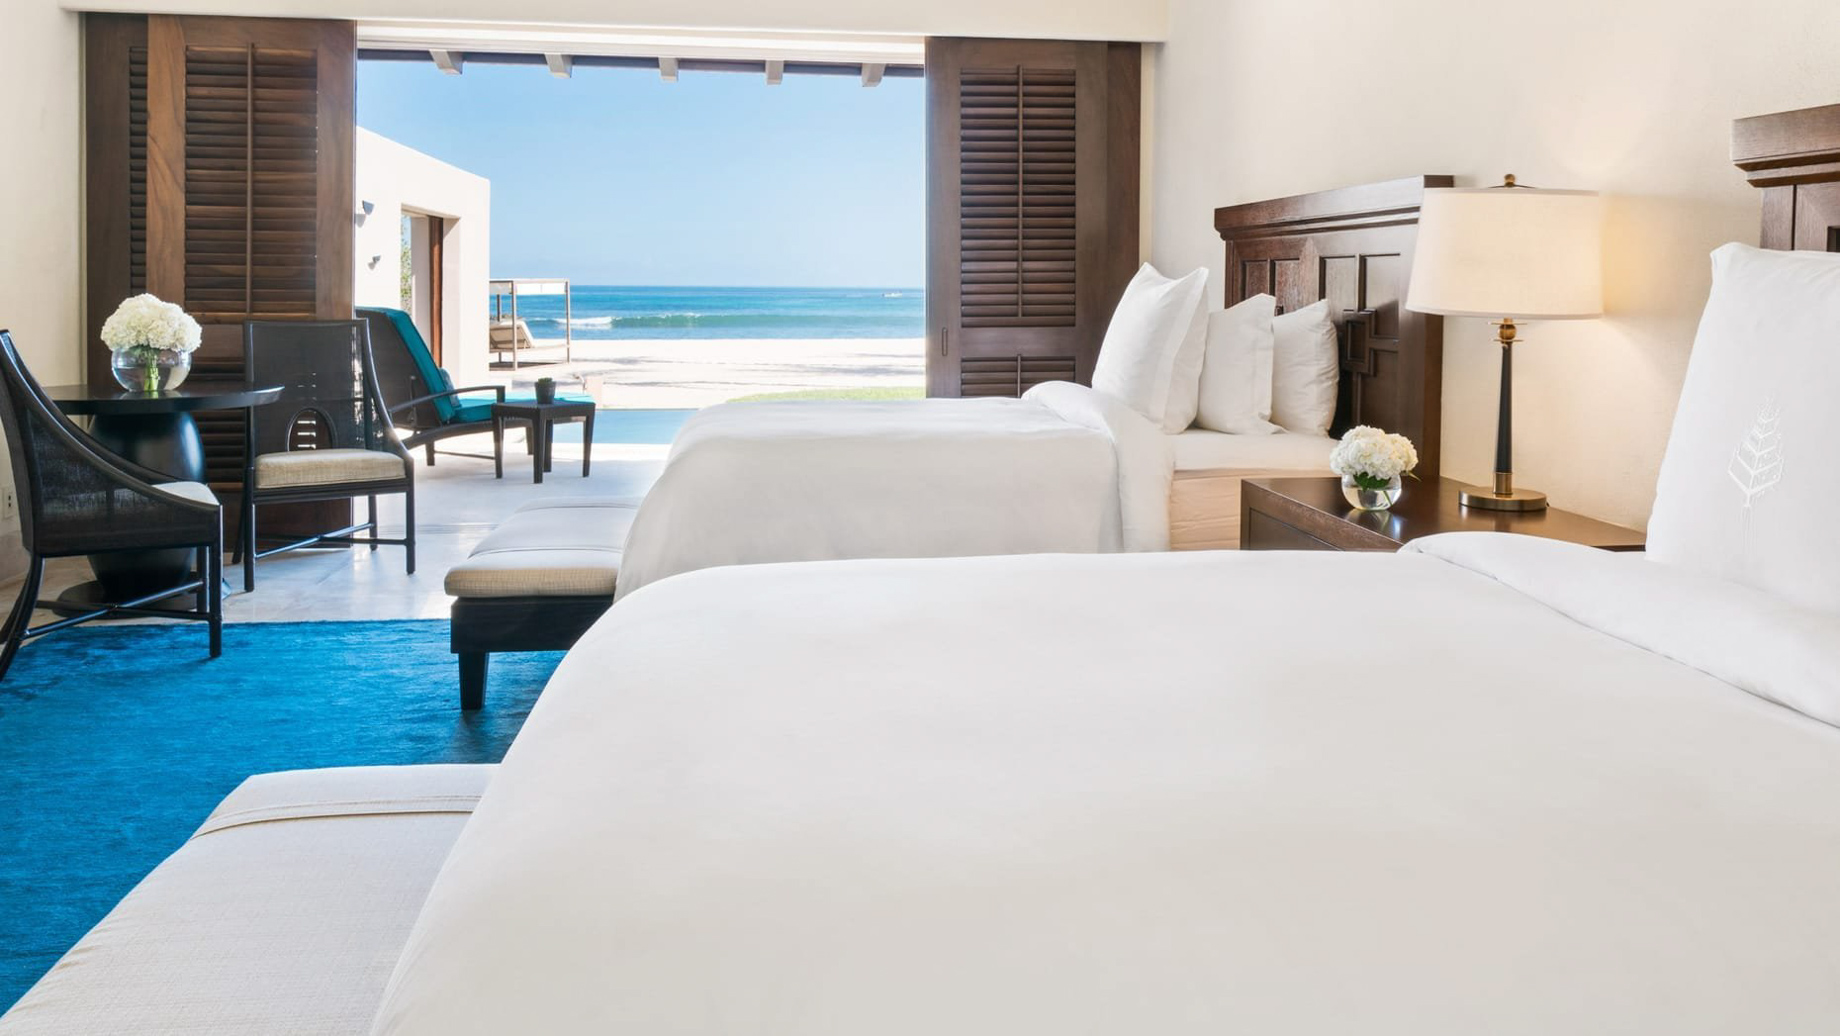 Four Seasons Resort Punta Mita – Nayarit, Mexico – Coral Beach House Bedroom